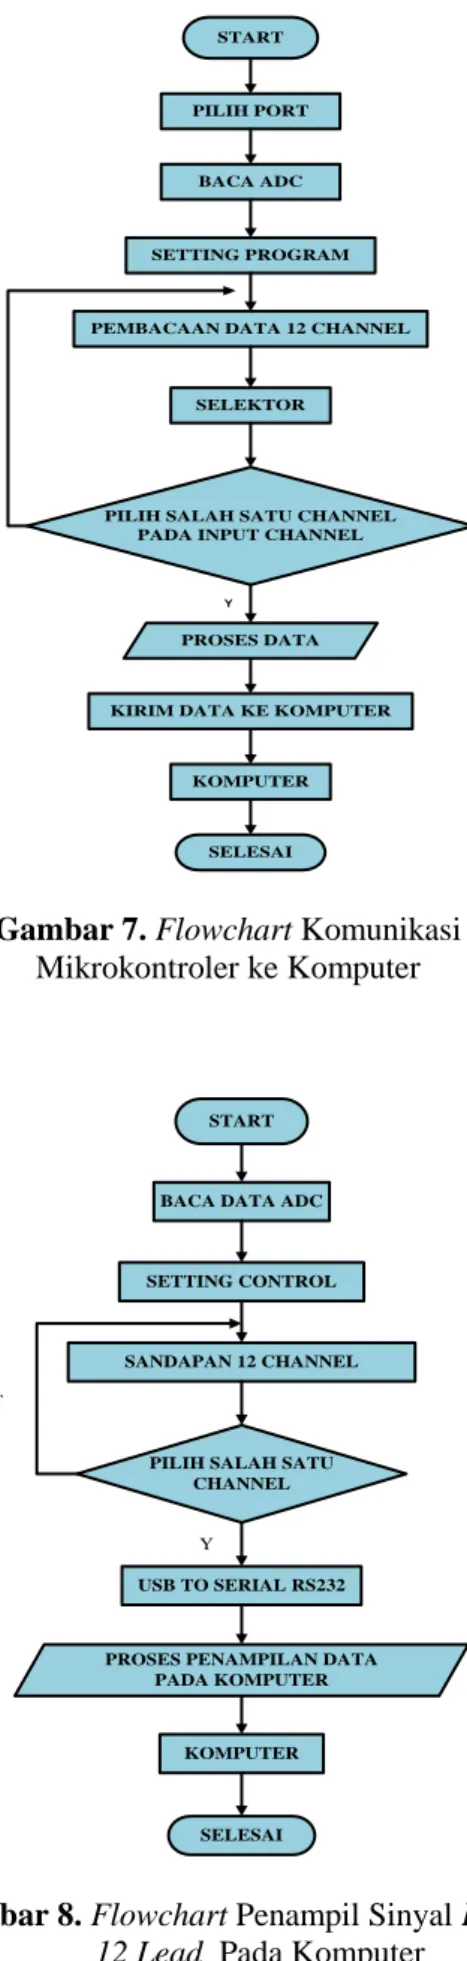 Gambar 7. Flowchart Komunikasi  Mikrokontroler ke Komputer 